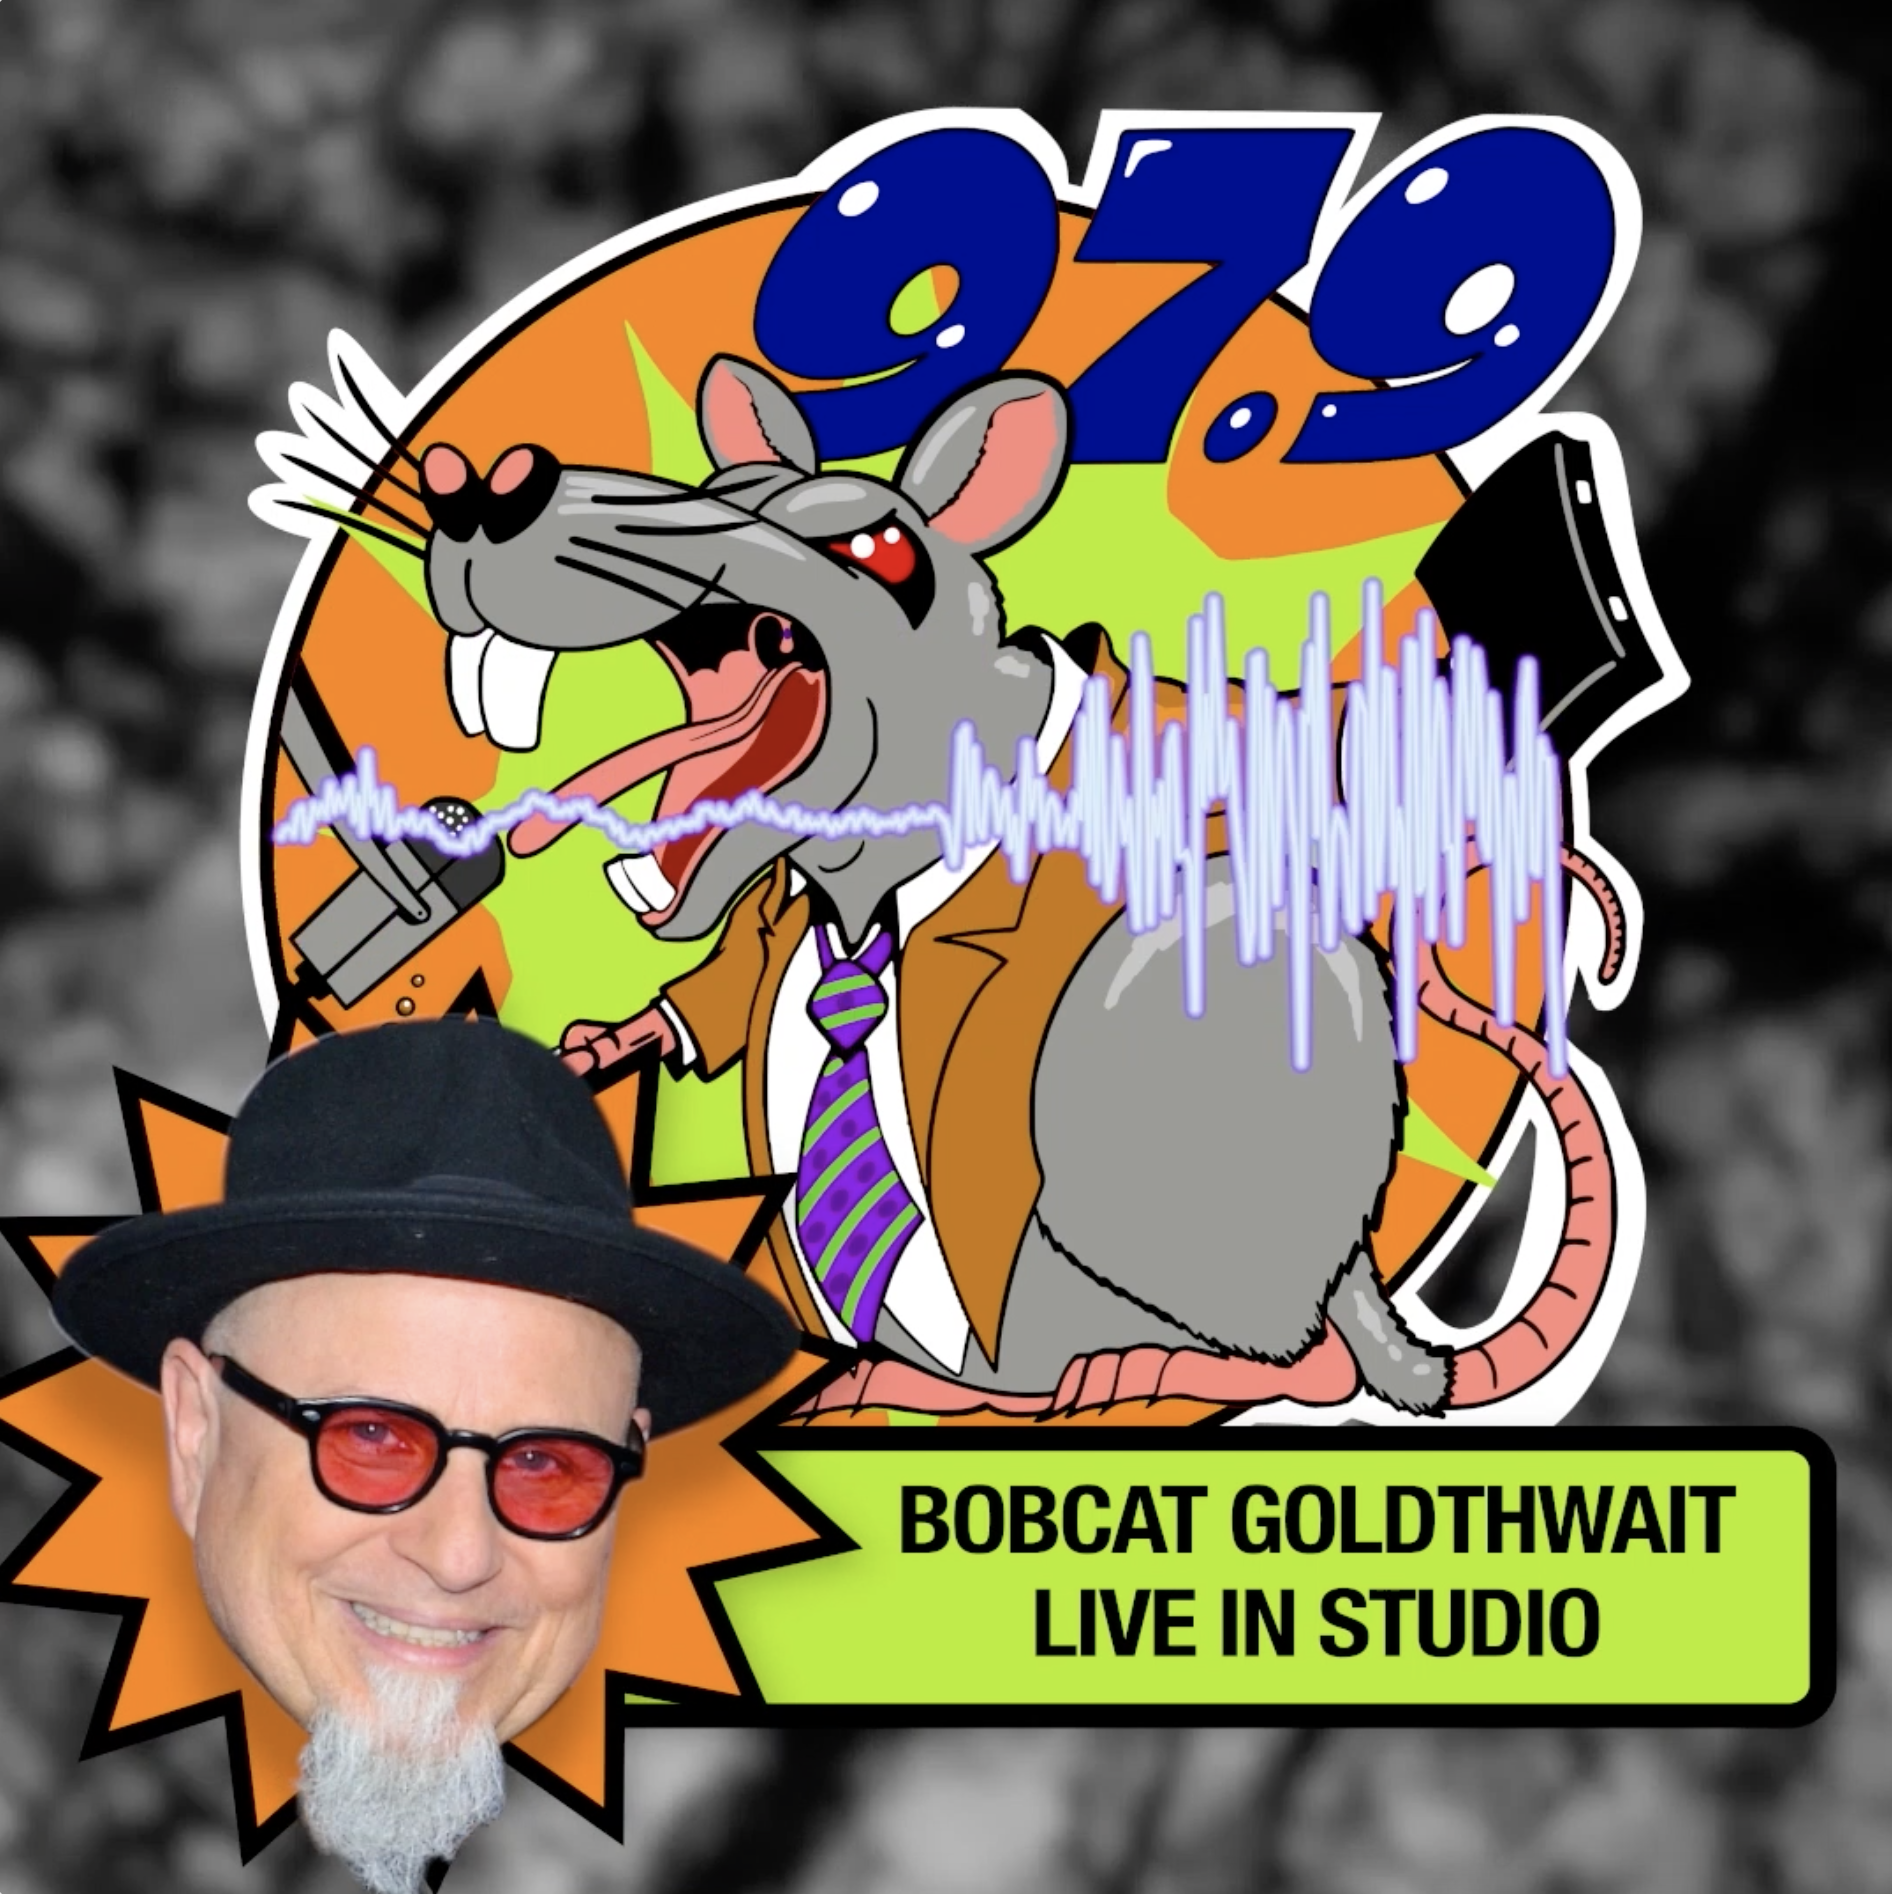 Bobcat Goldthwait in Studio!